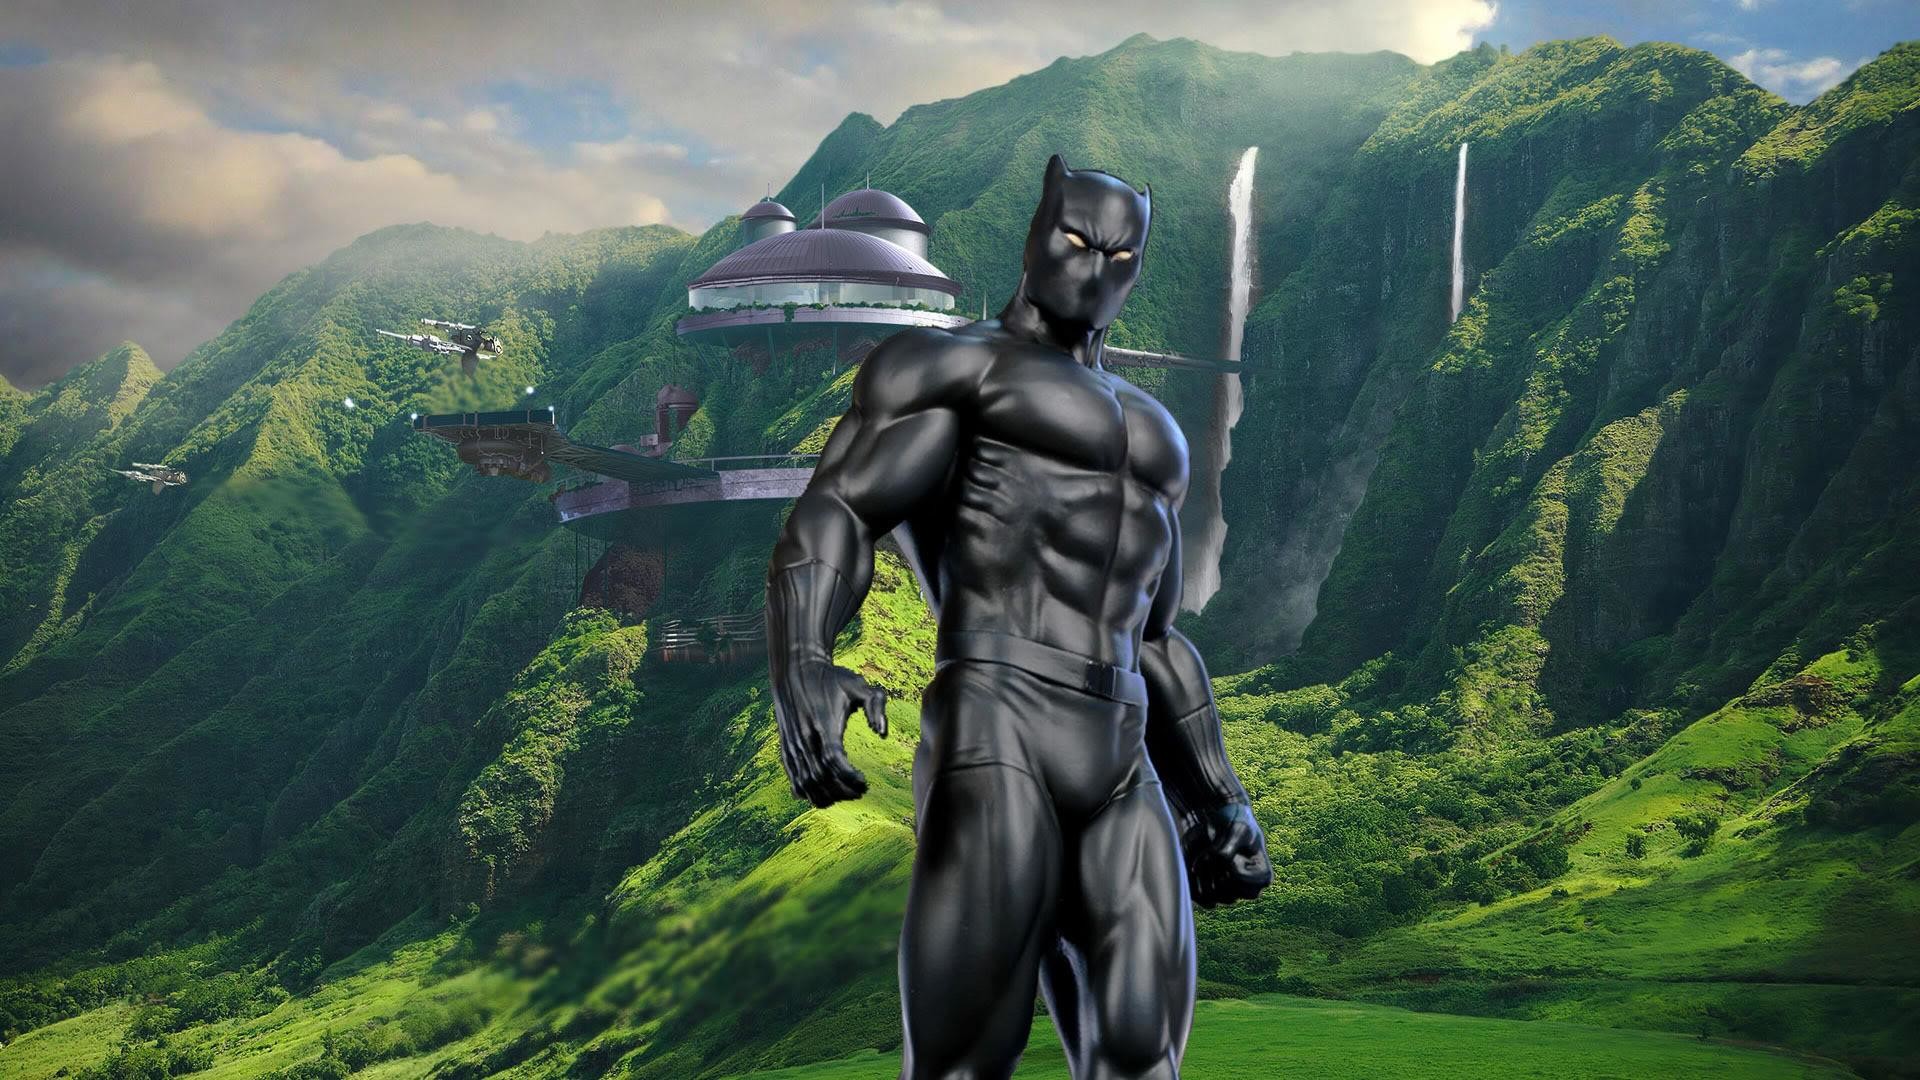 Download 2017 Black Panther Desktop Background HD Wallpaper. Search